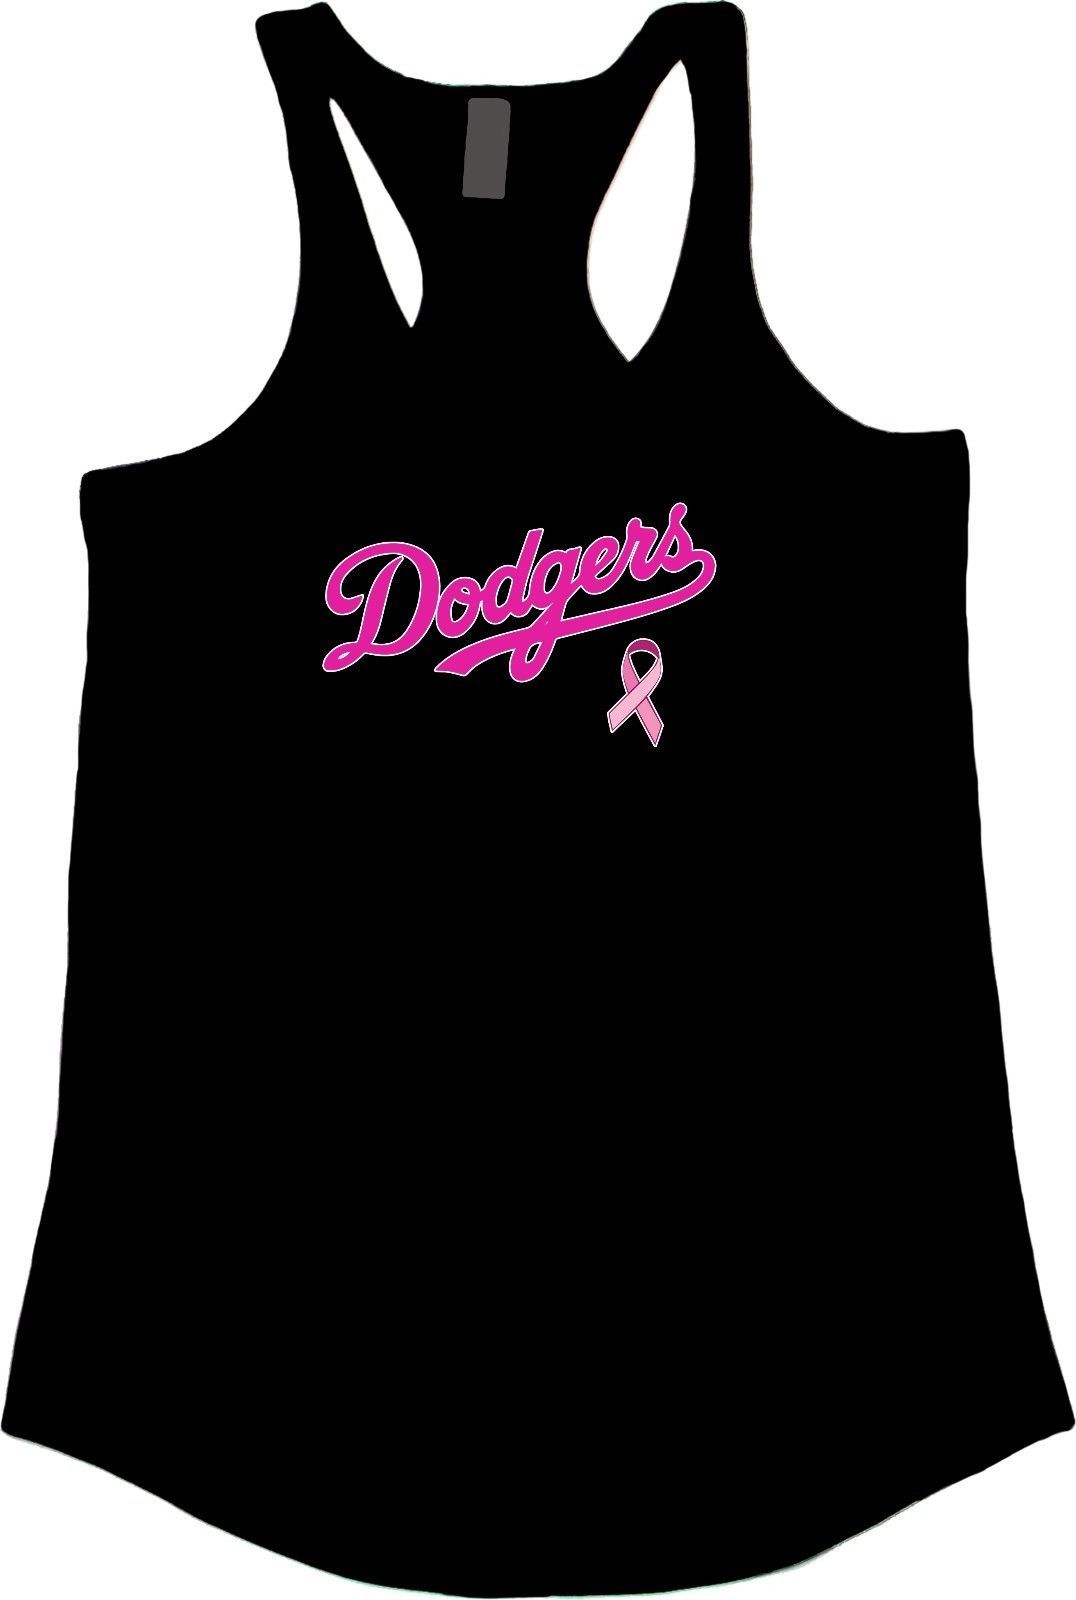 Los Angeles Dodgers Cancer Awareness Ladies/Women's Scallop Bottom Tank Tops